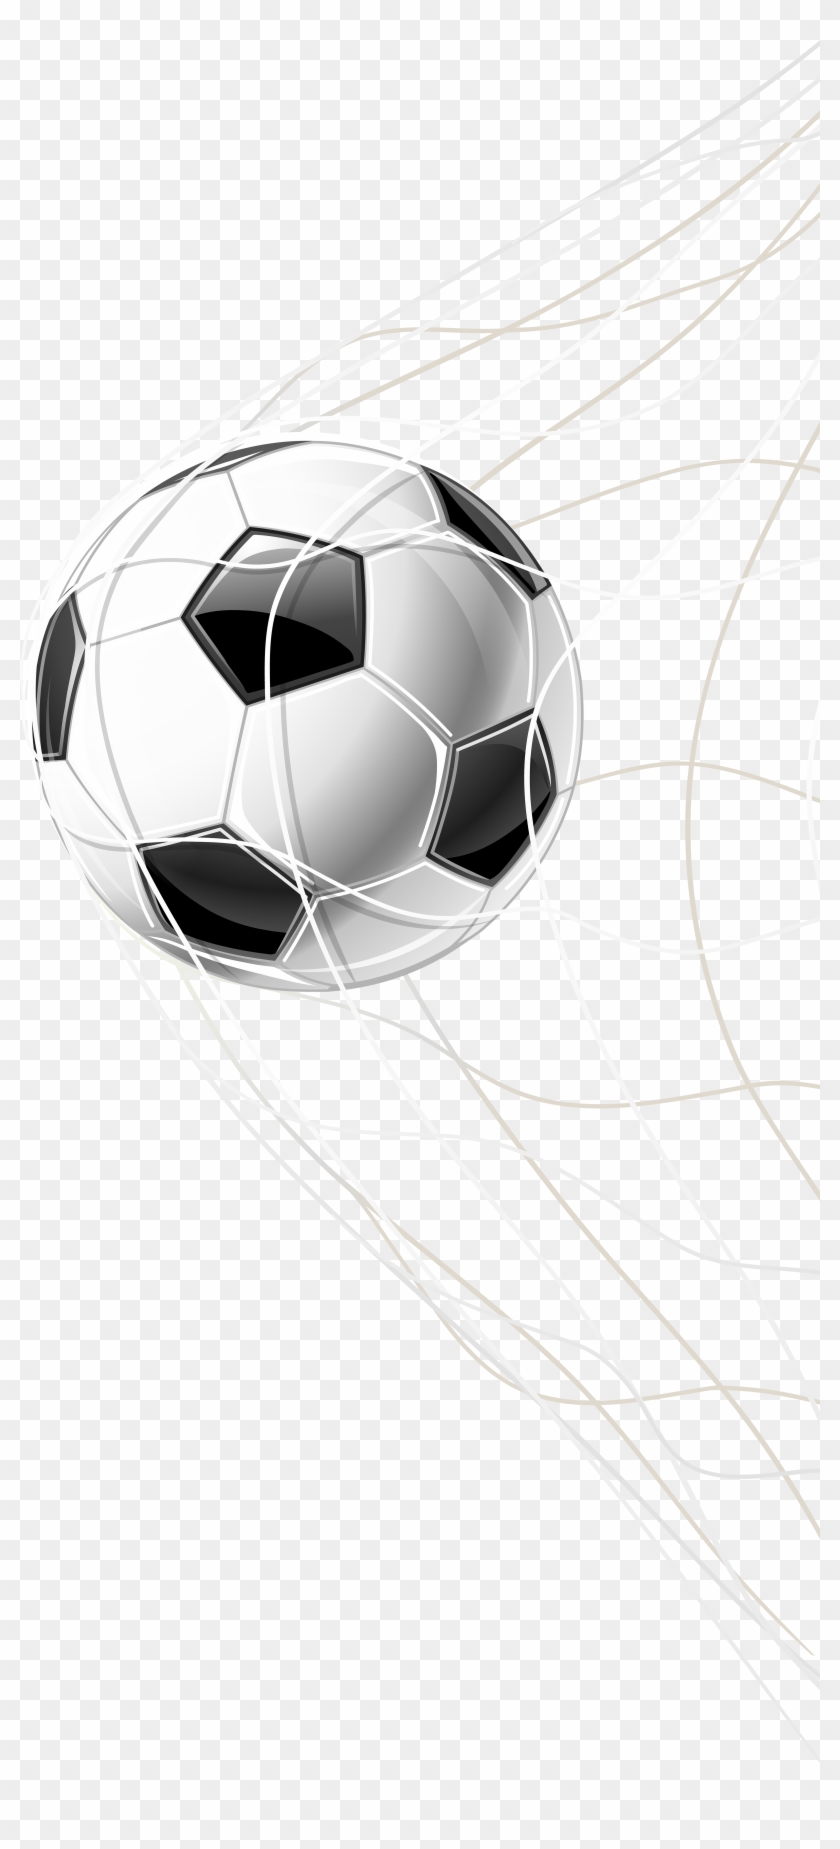 Soccer Goal In A Net Png Clip Art Image Soccer Goal Png Transparent Png Pikpng